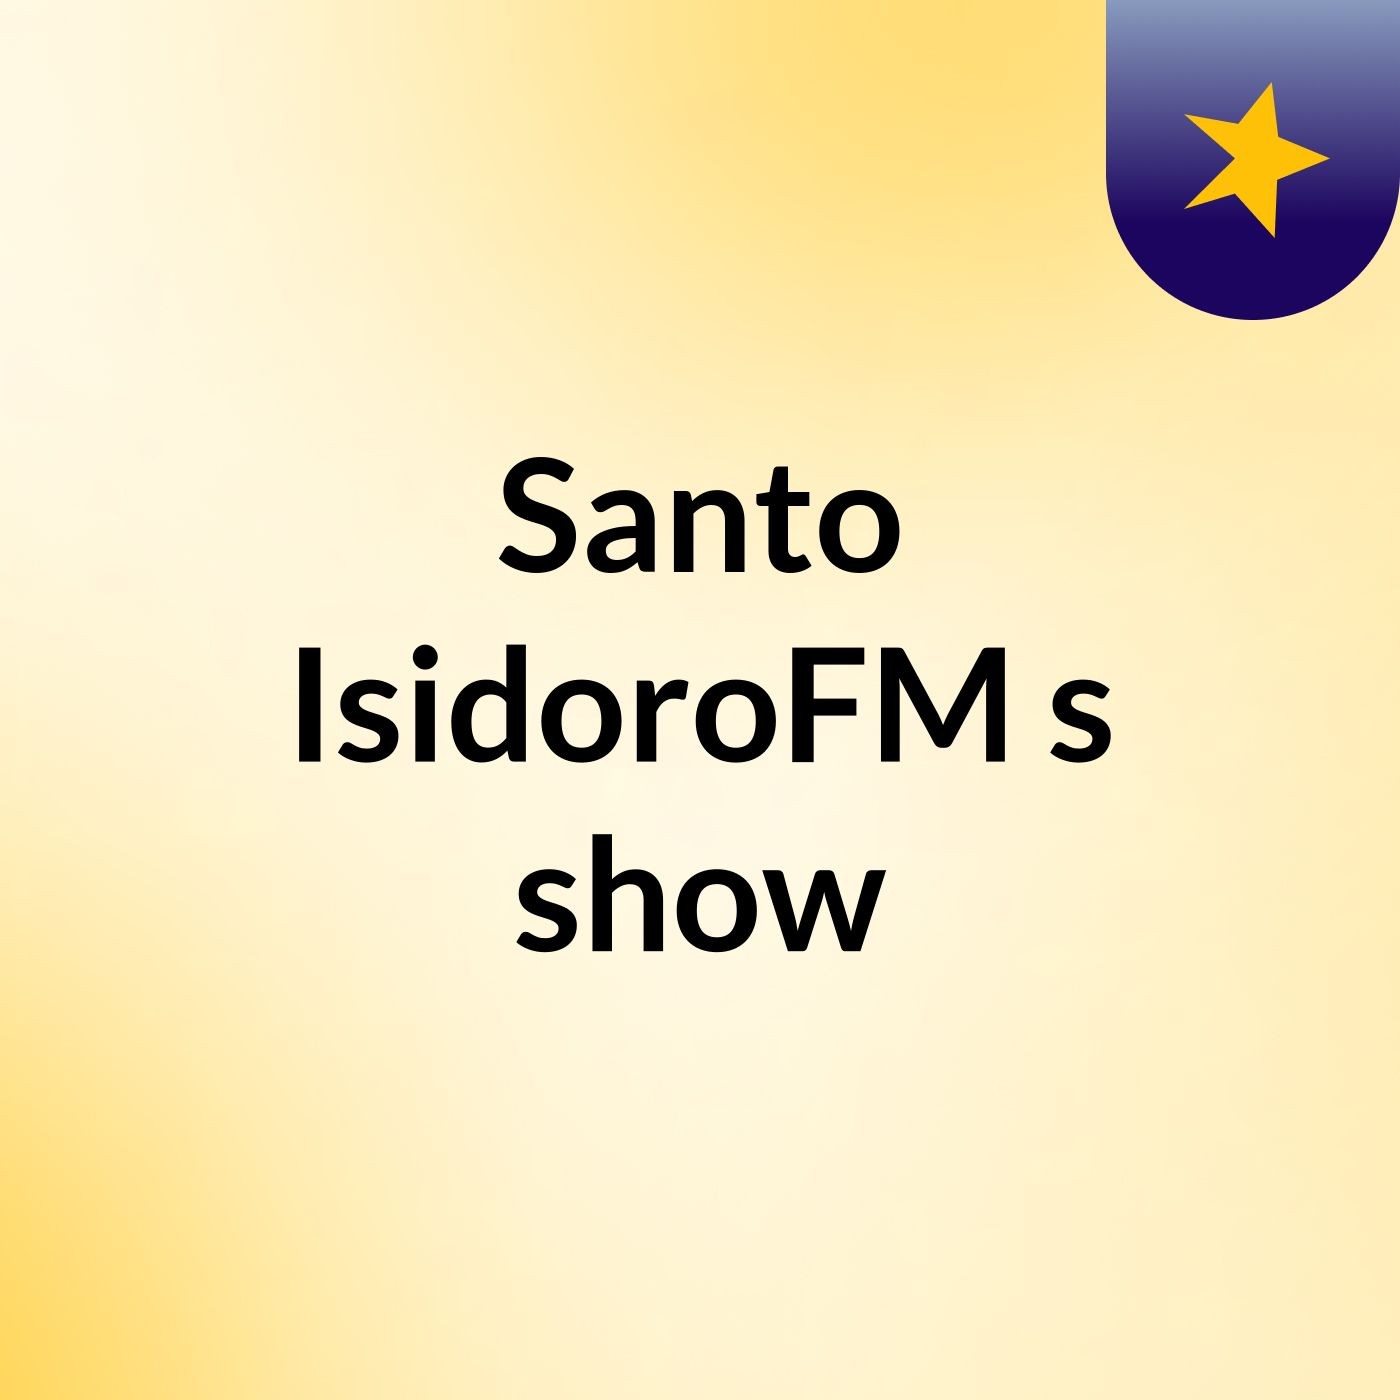 Santo IsidoroFM's show